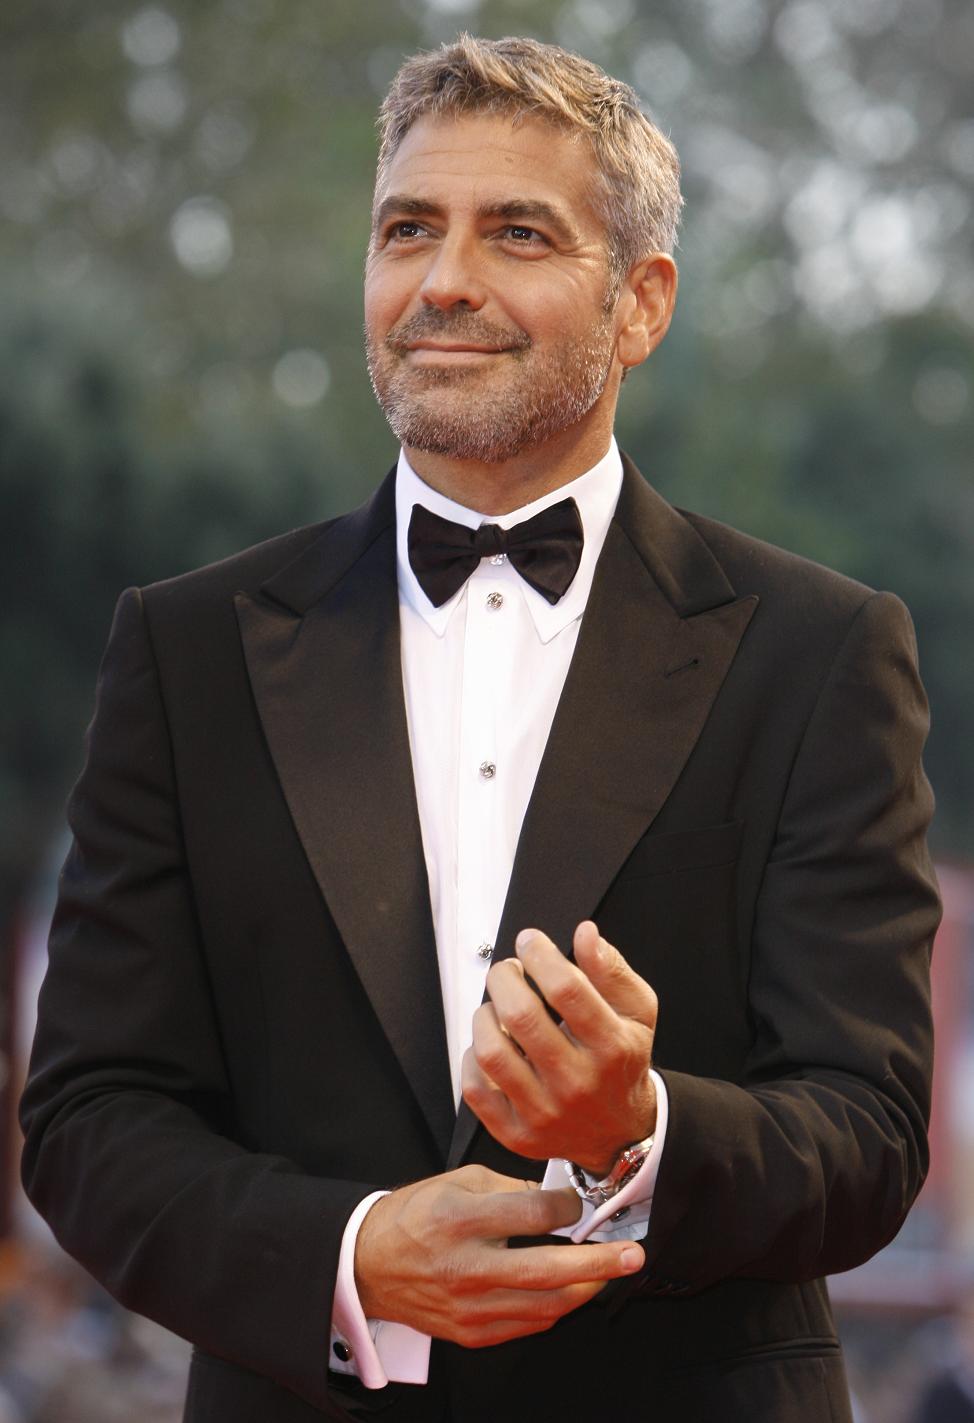 George Clooney czy Noah Wyle ? kto zagra Steve?a Jobsa?